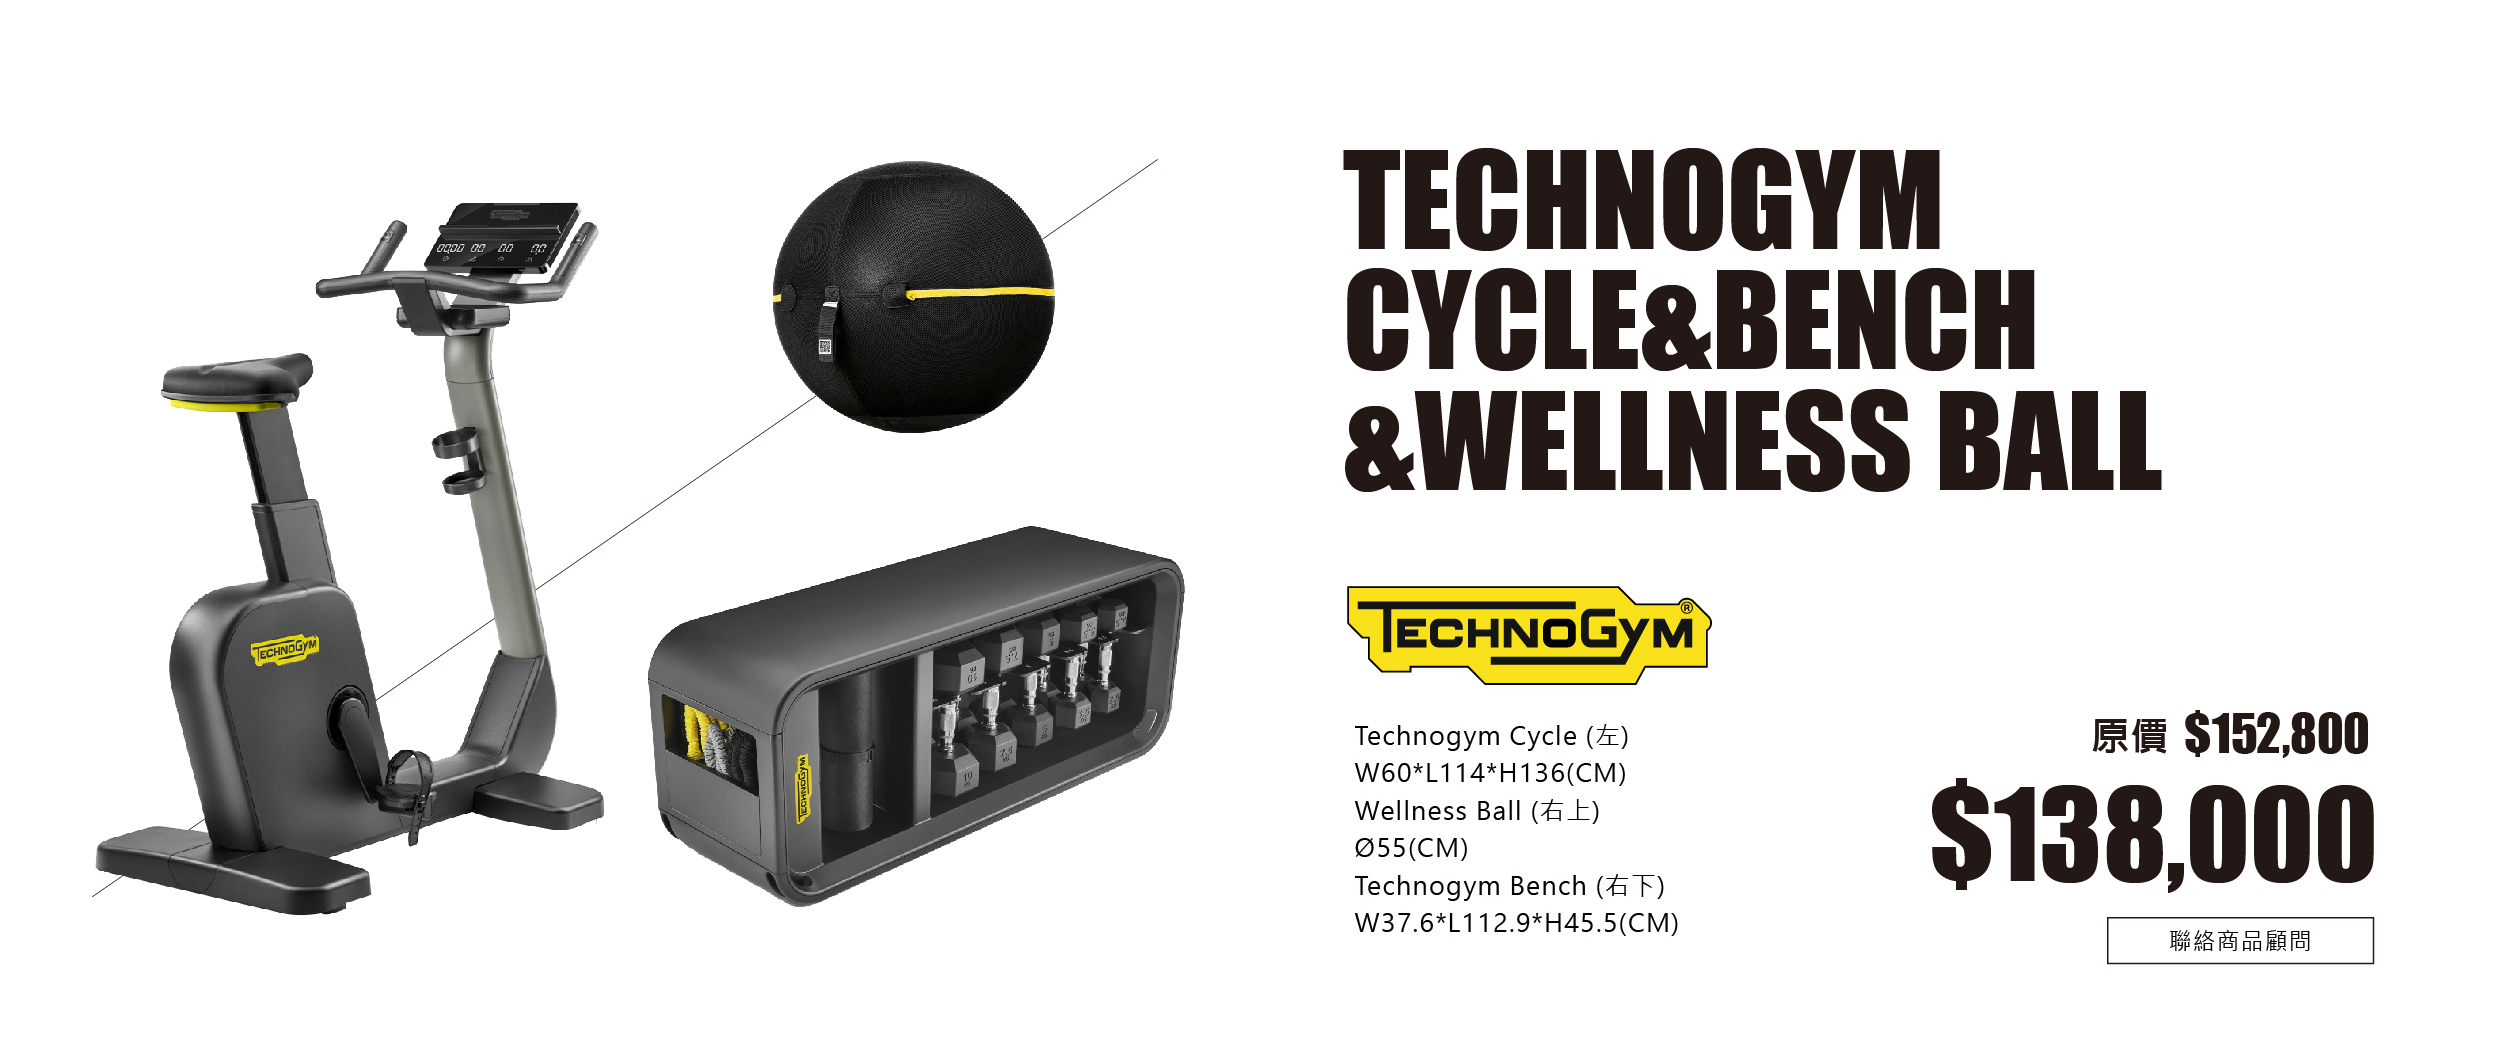 TG cycle & bench & wellness ball